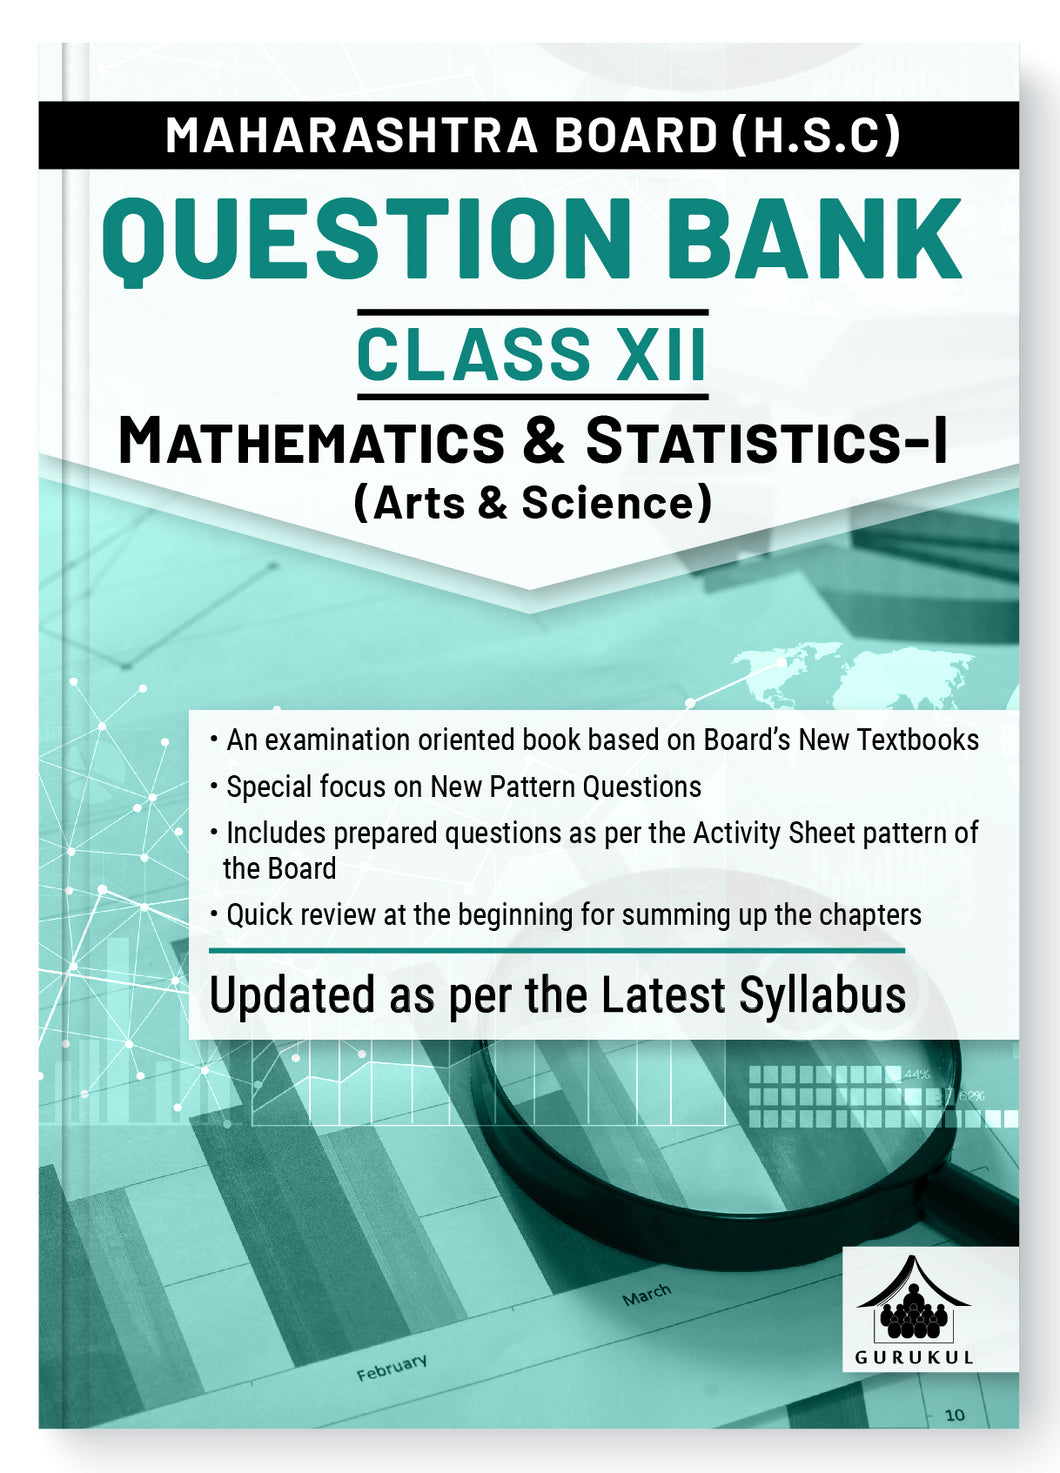 Gurukul H.S.C Mathematics & Statistics - I Question Bank for MH Board Class 12